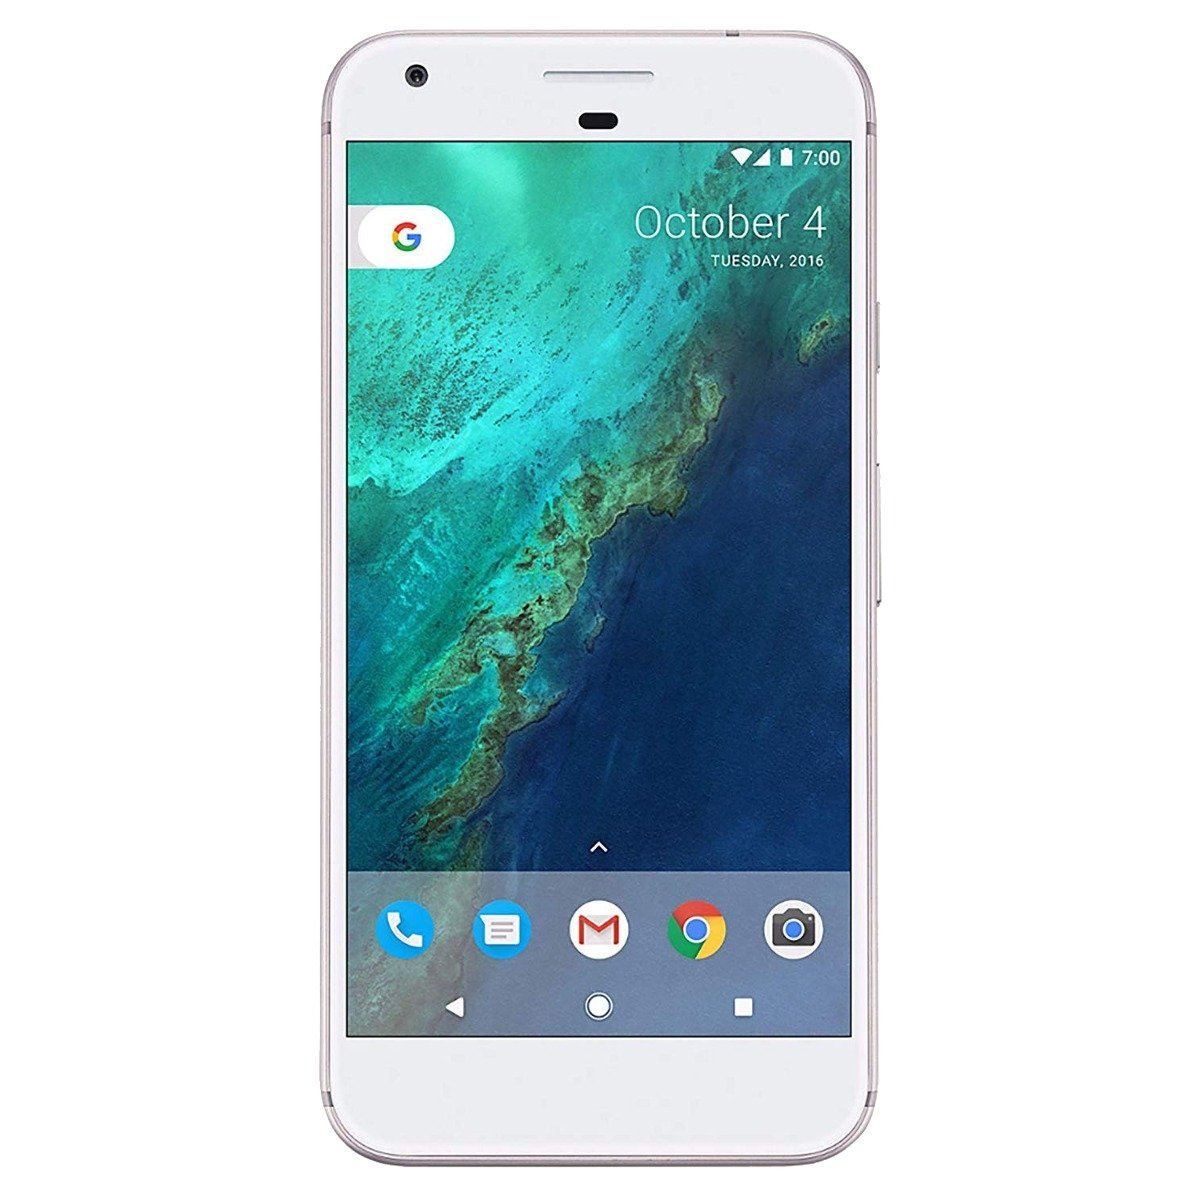 Google Pixel XL 32GB Silver Factory Unlocked